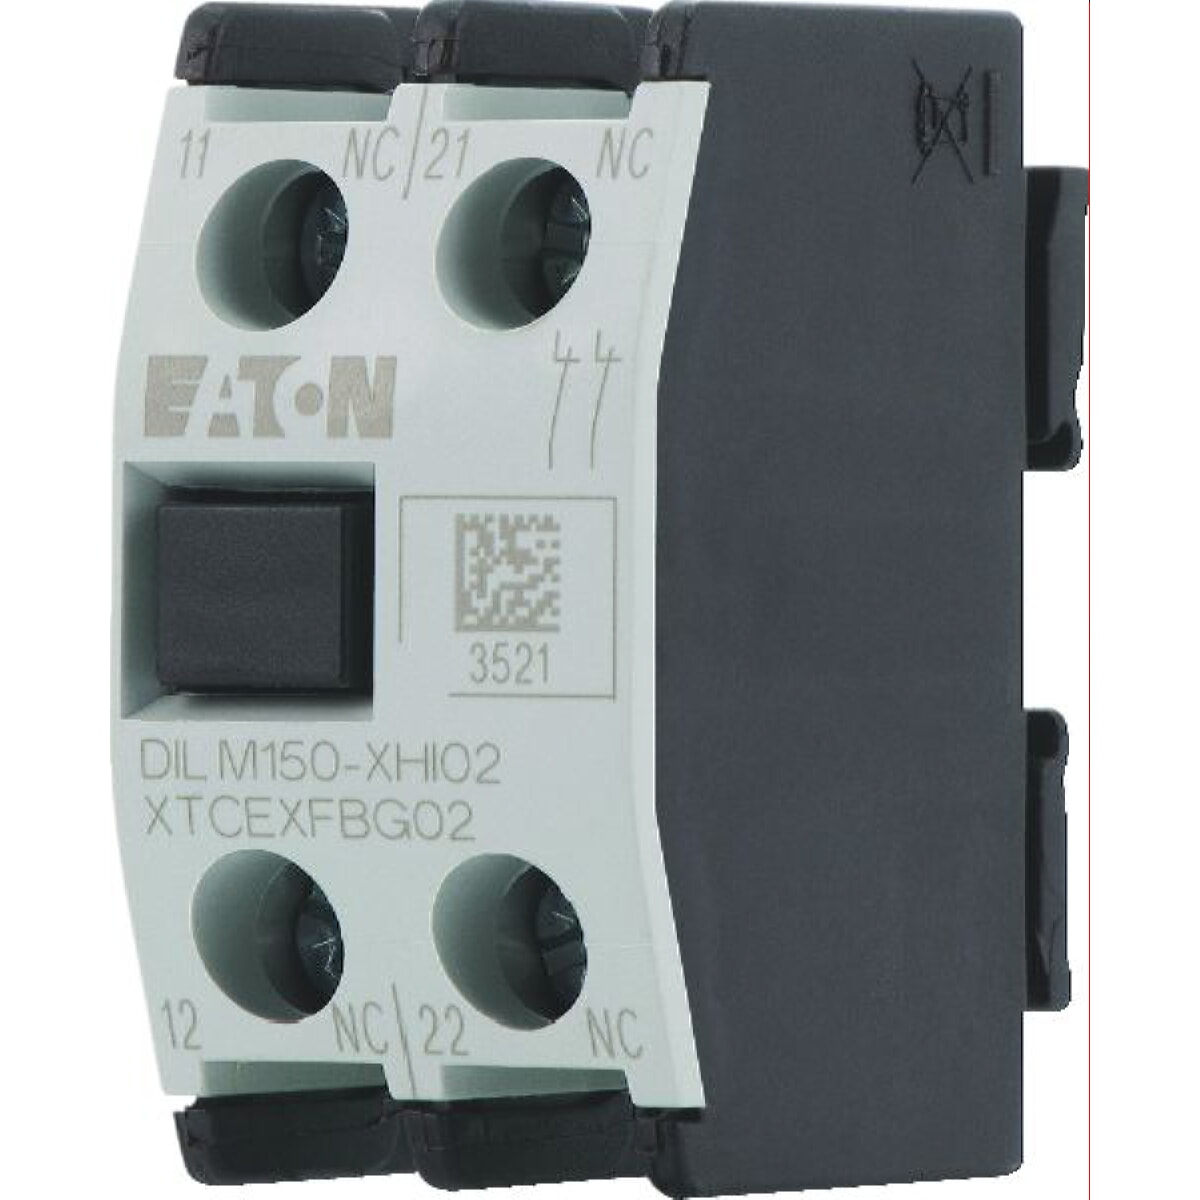 EATON Electric Hilfsschalter DILM150-XHI02